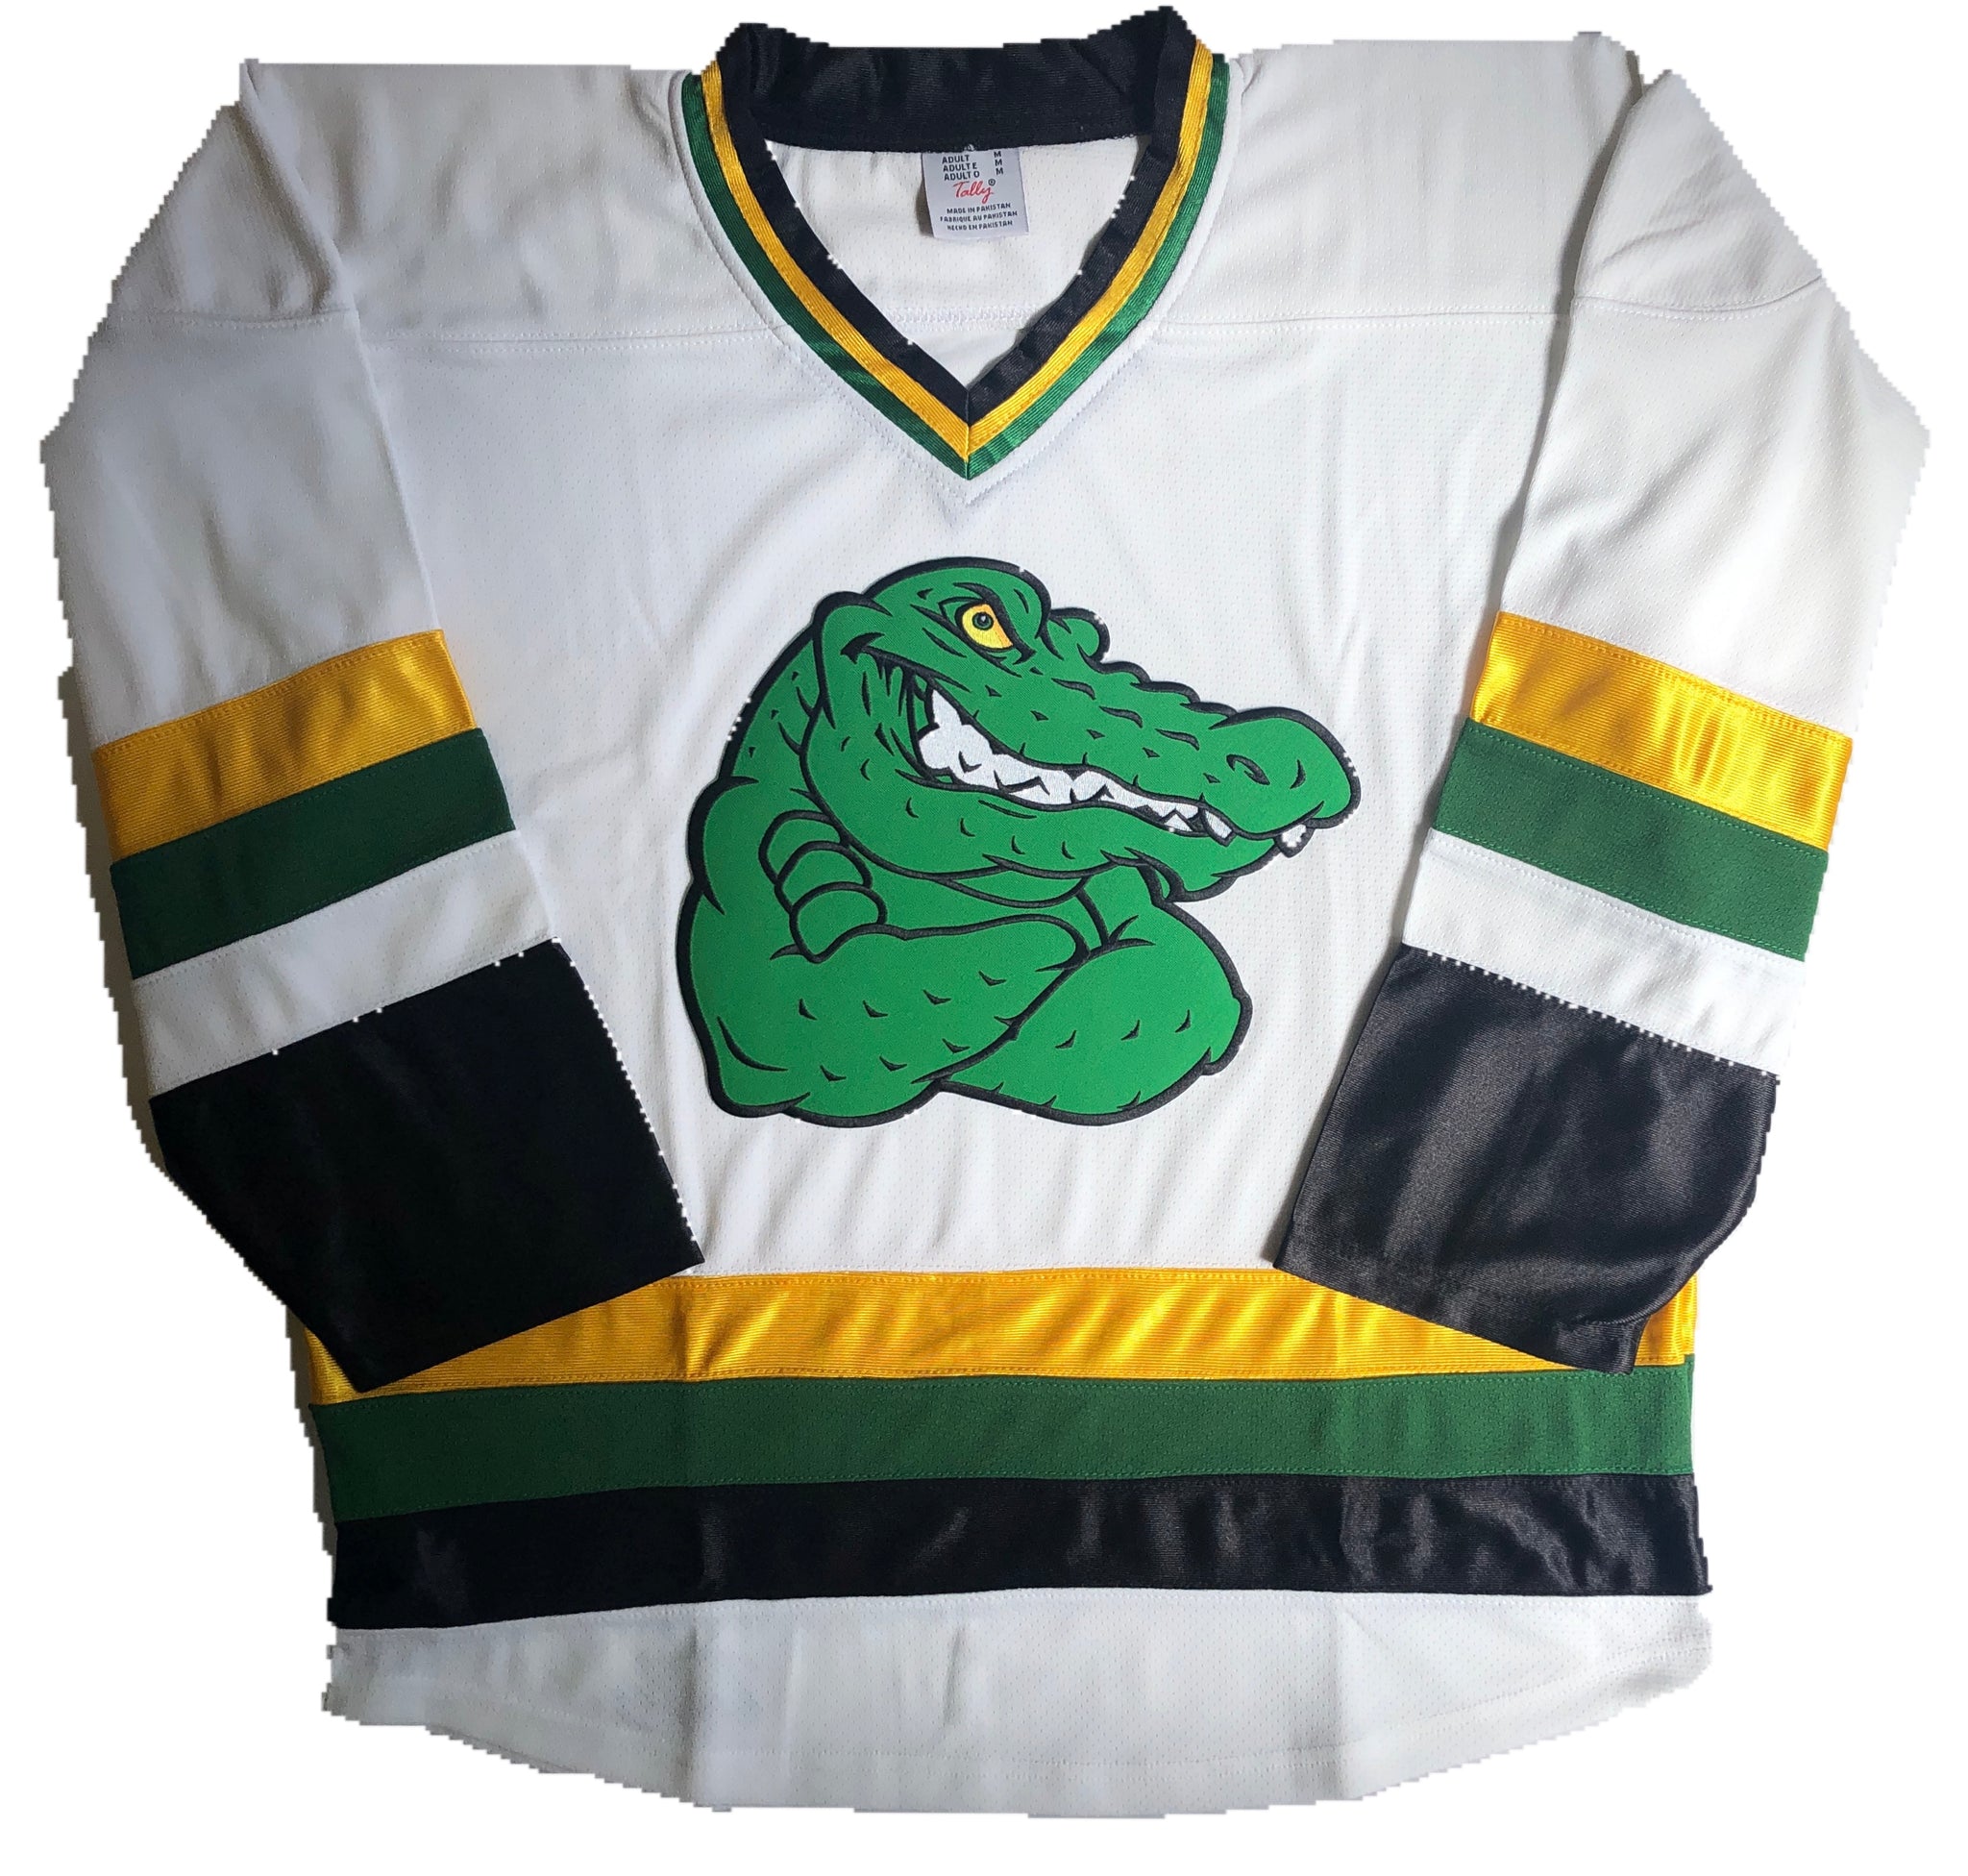 Custom Embroidered Hockey Jerseys: Order Custom Sewn Jerseys